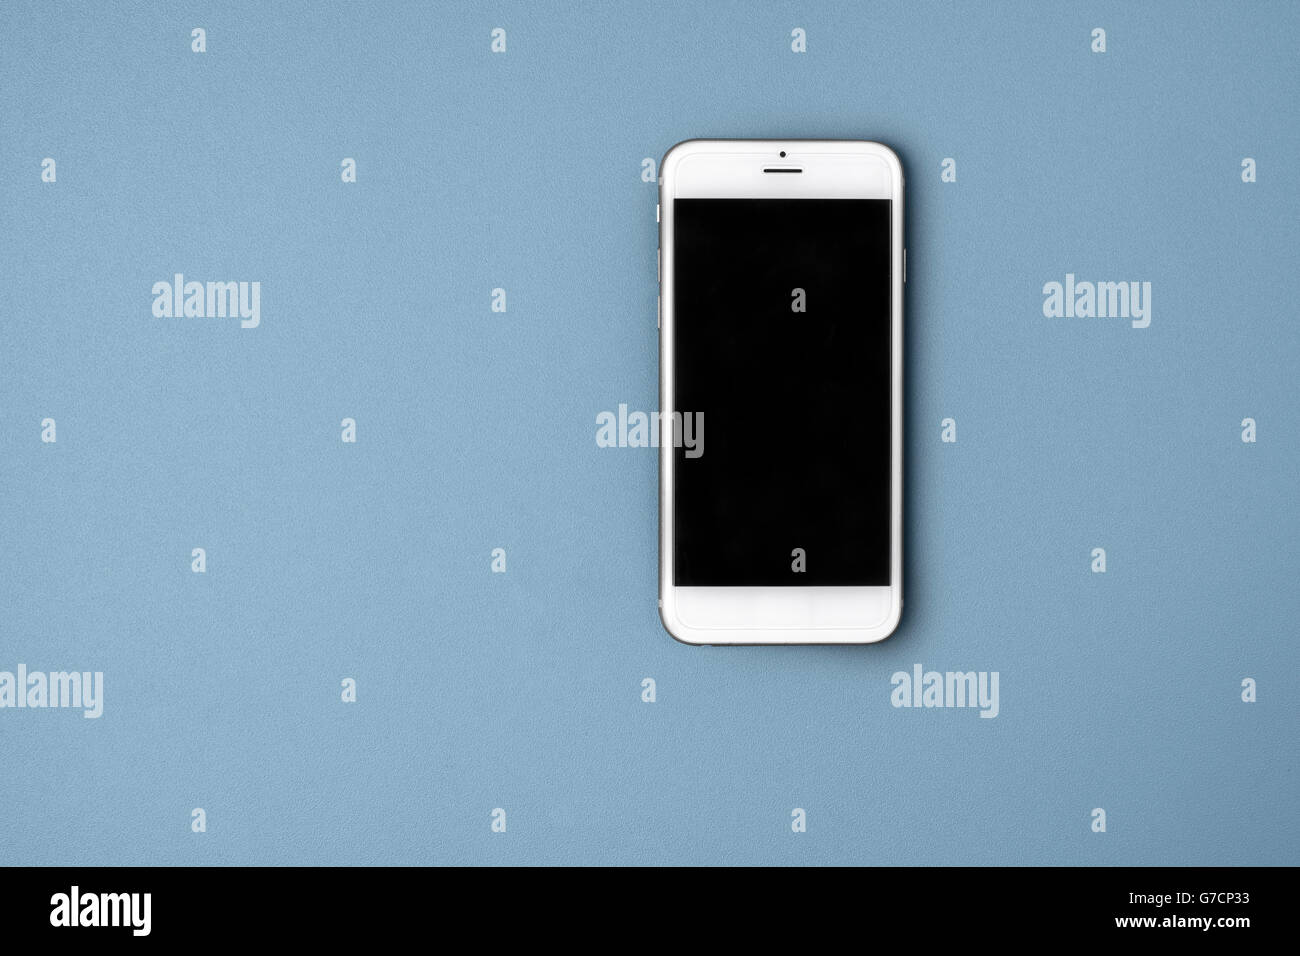 Blank smart phone on background Stock Photo